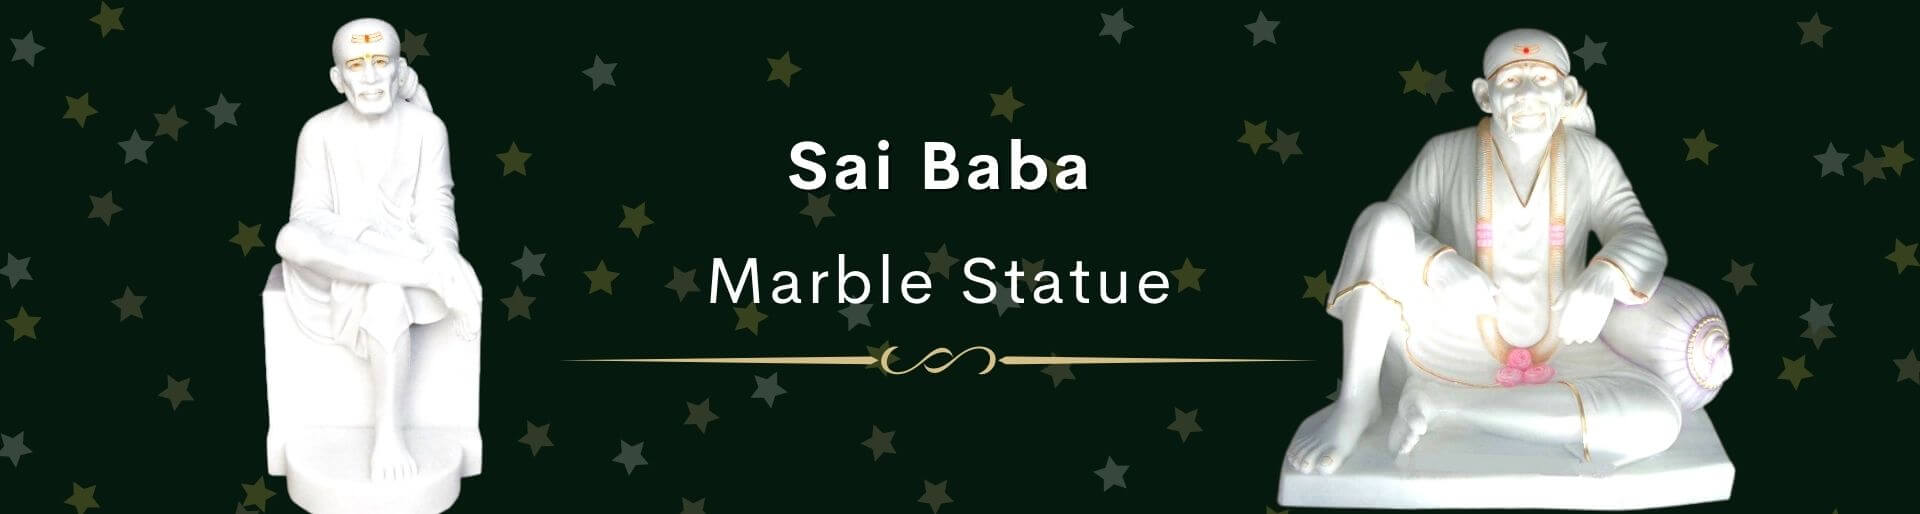 marble sai baba statue